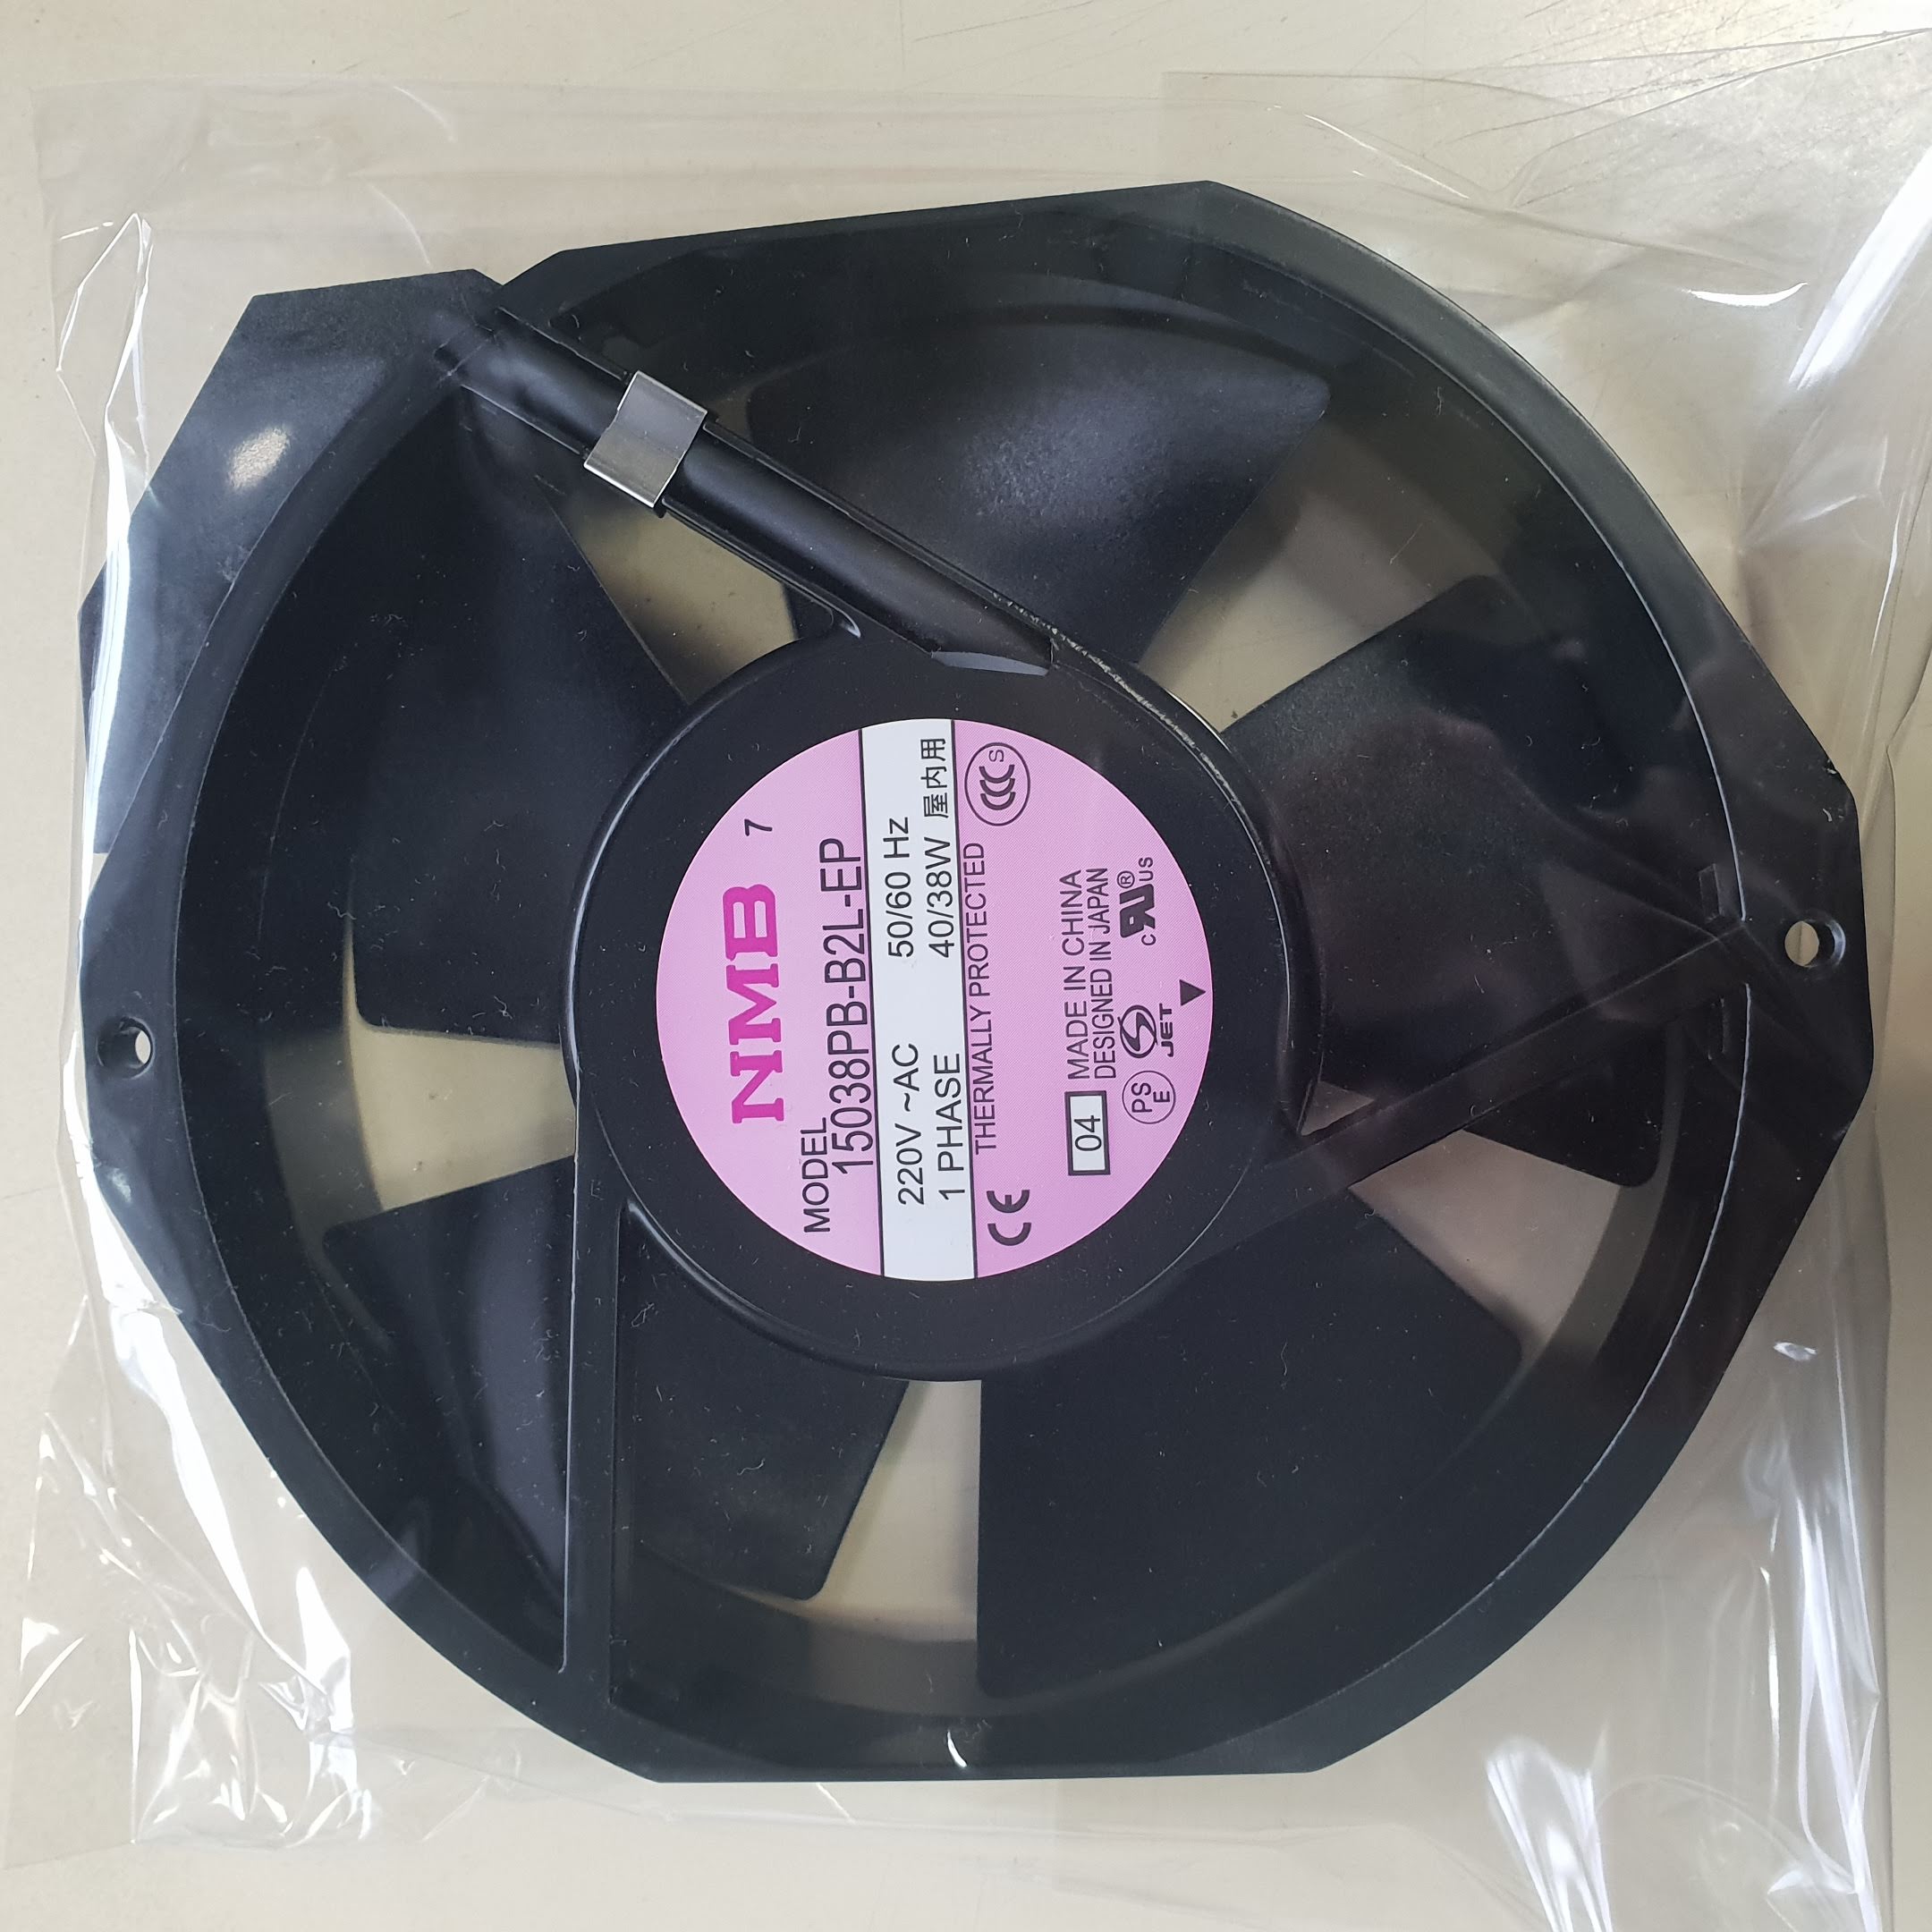 NMB : Cooling fan